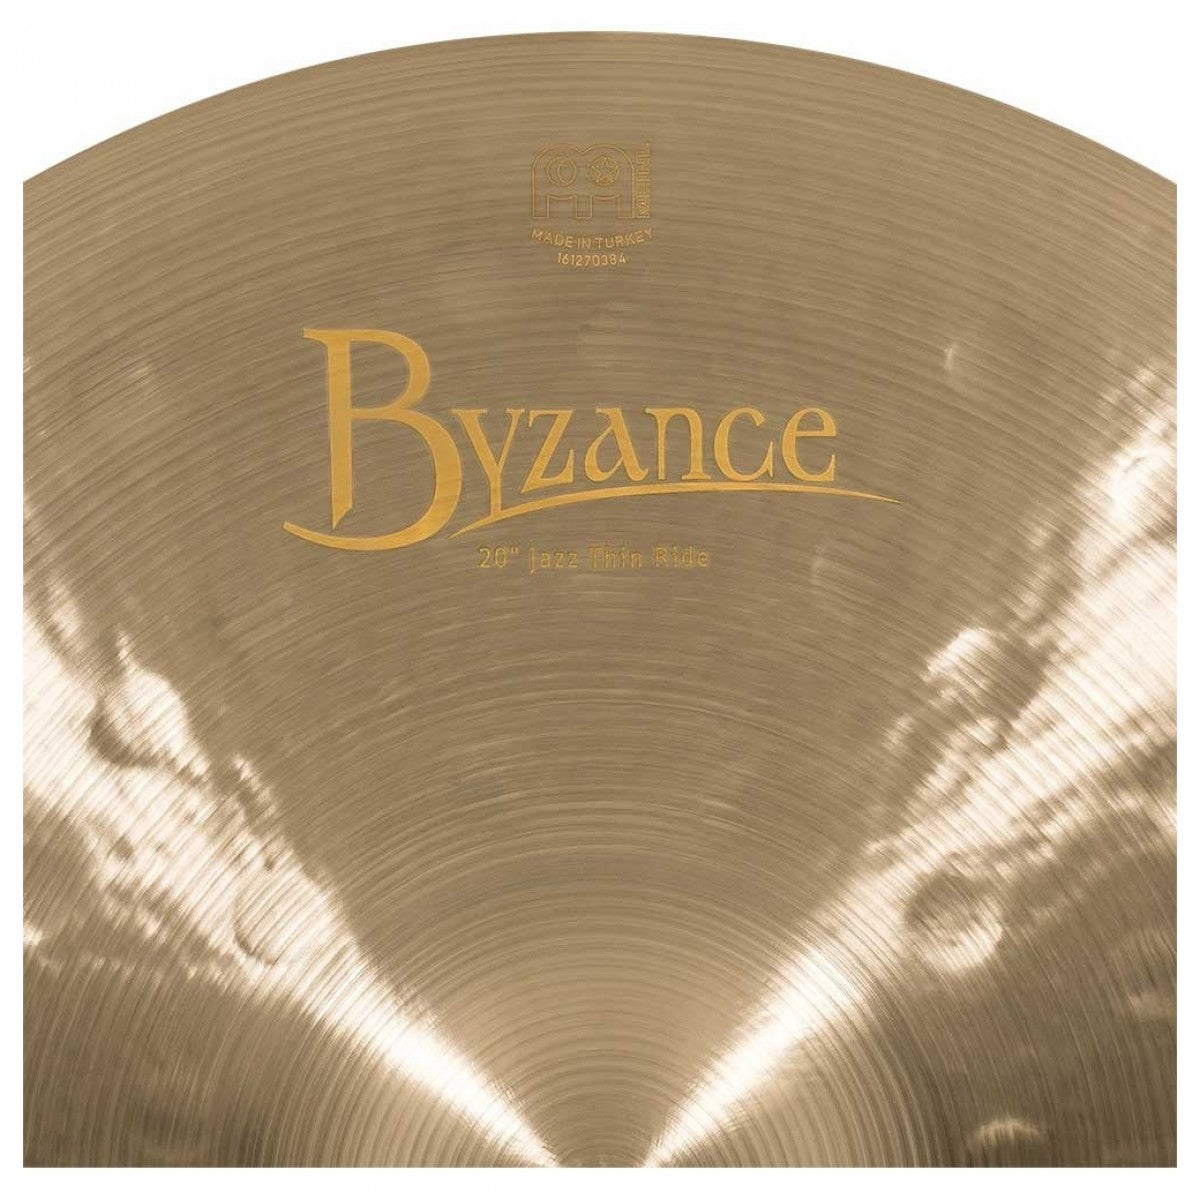 Cymbal Meinl Byzance Jazz 20" Thin Ride - B20JTR - Việt Music